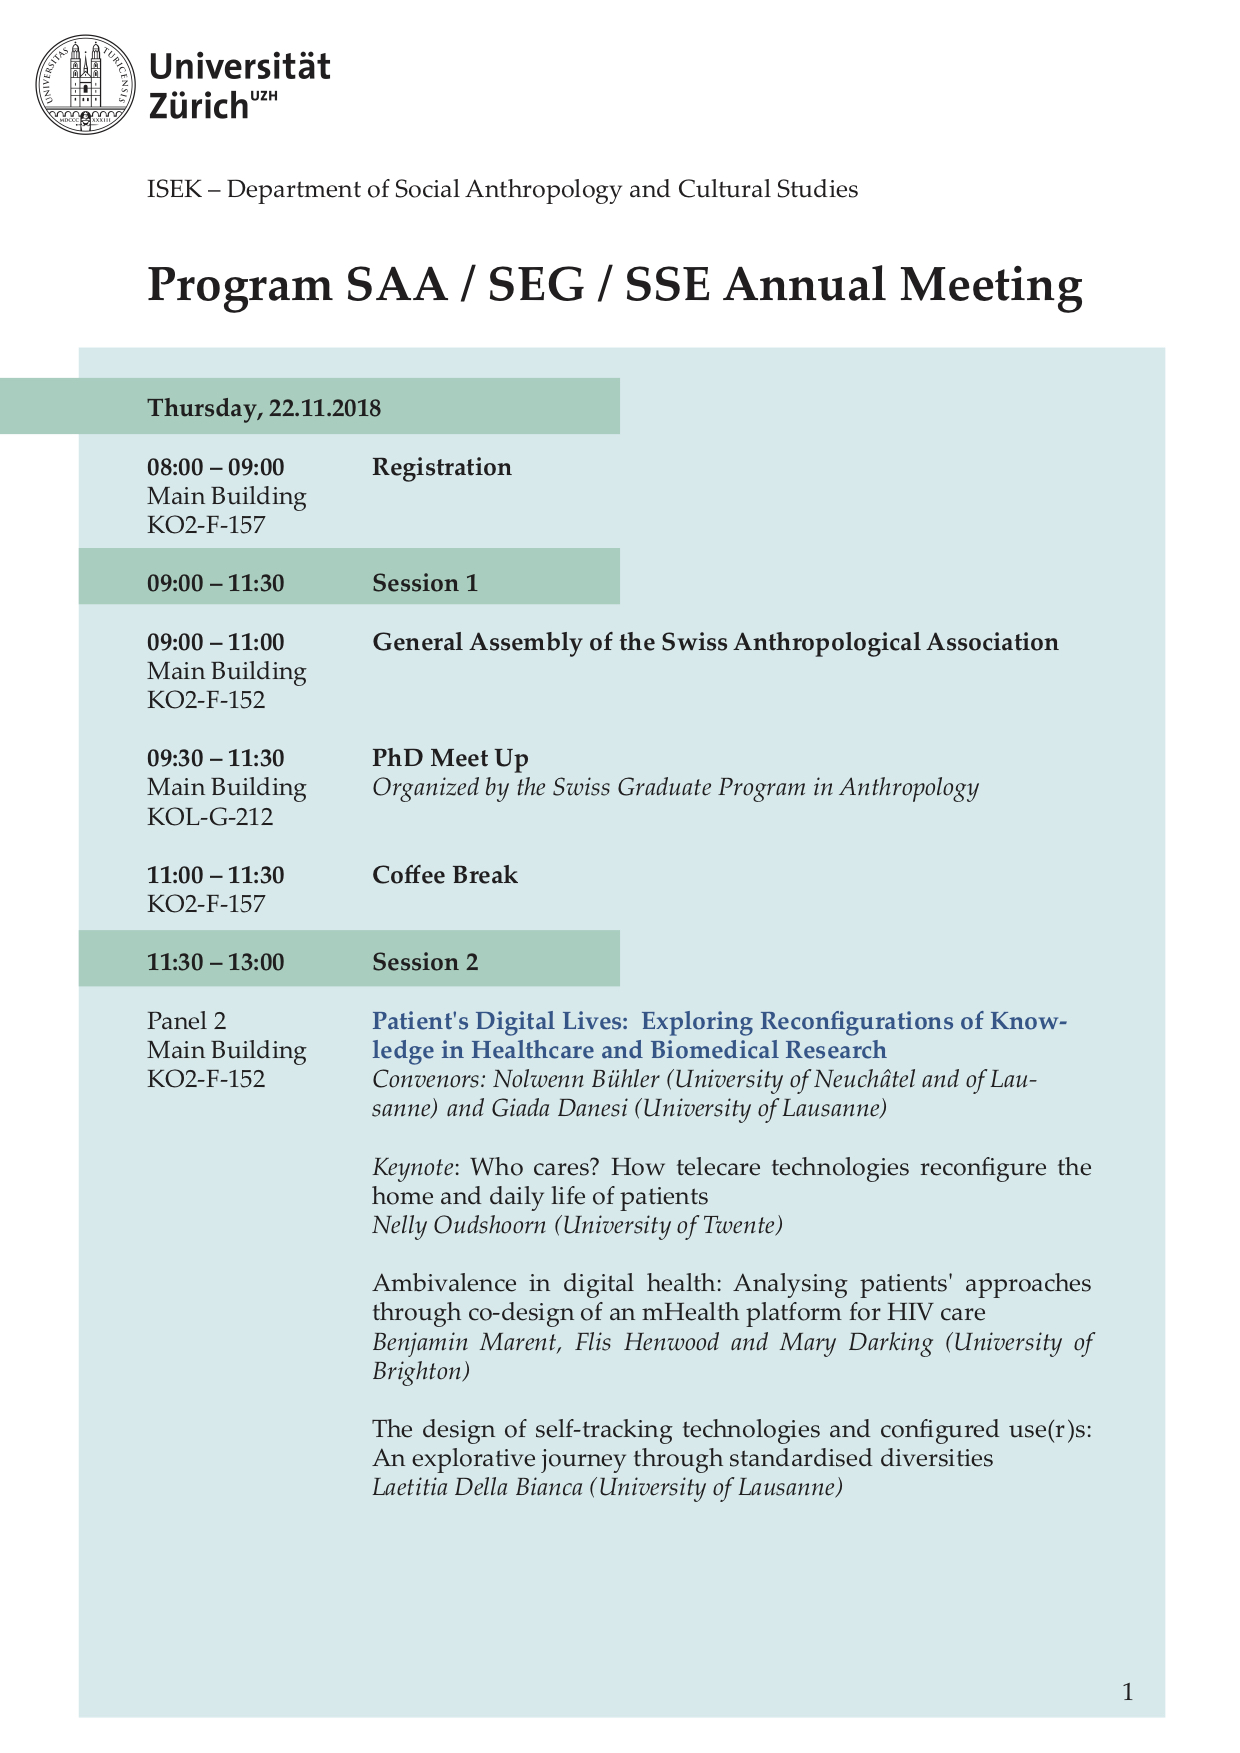 Program-SAA-SEG-SSE-Annual-Meeting_Seite_01